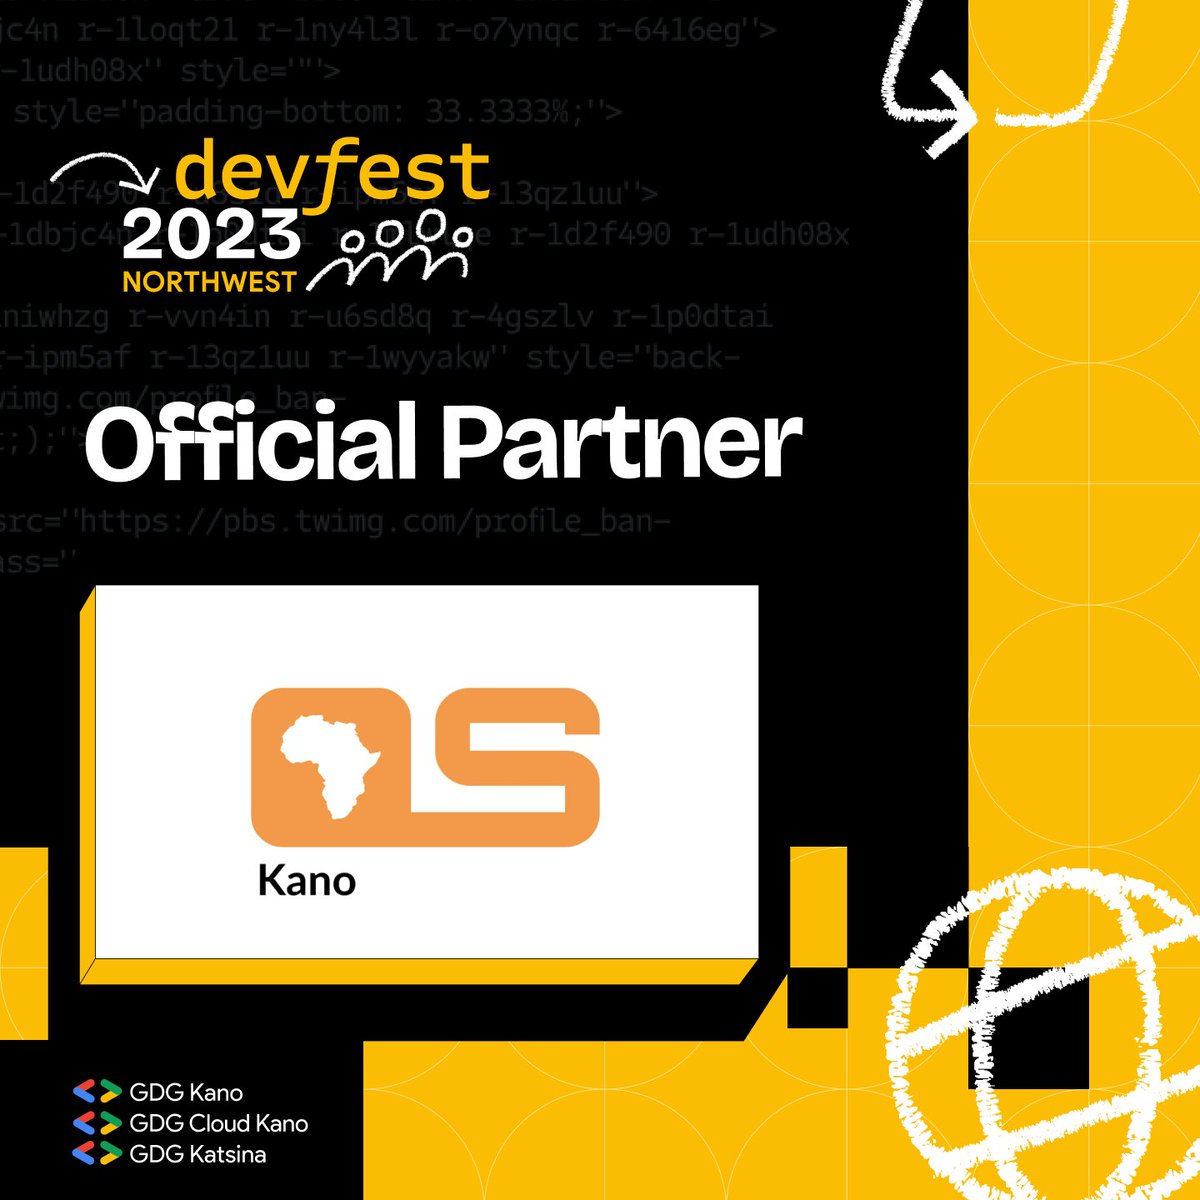 Meet our partners
@StartupKano 
@osca_kano 
Baba Ahmed university
Fast flip